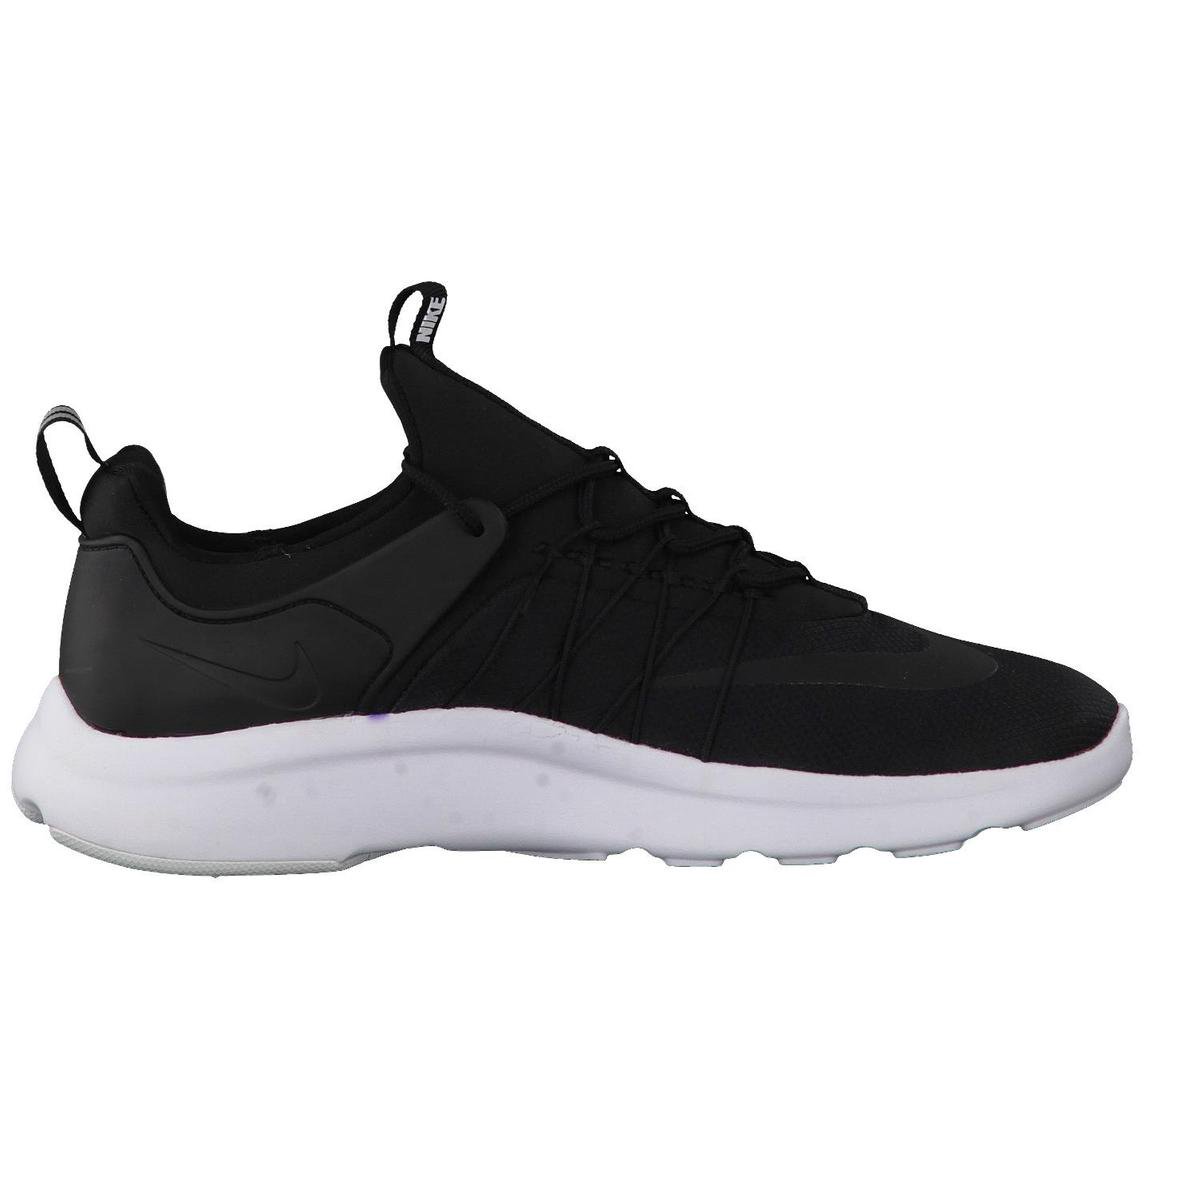 - Darwin - Sneaker runner - Heren - Maat 41 - Zwart - 002 -Black/Black/White | bol.com